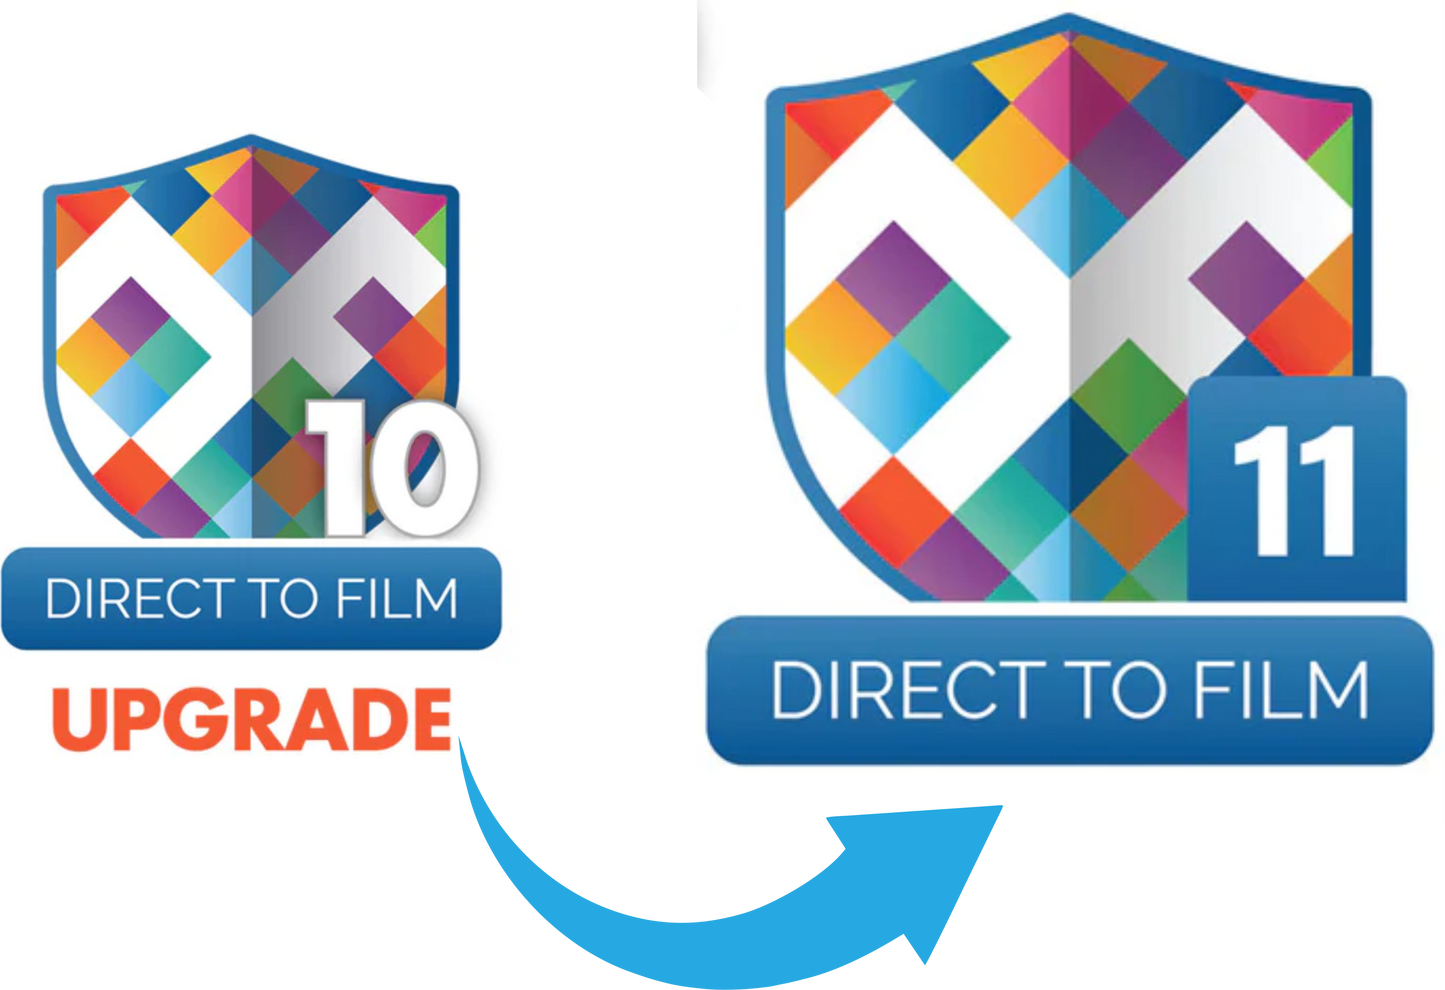 Digital Factory V10 To Digital Factory V11 - Direct to Film Edition (Upgrade)